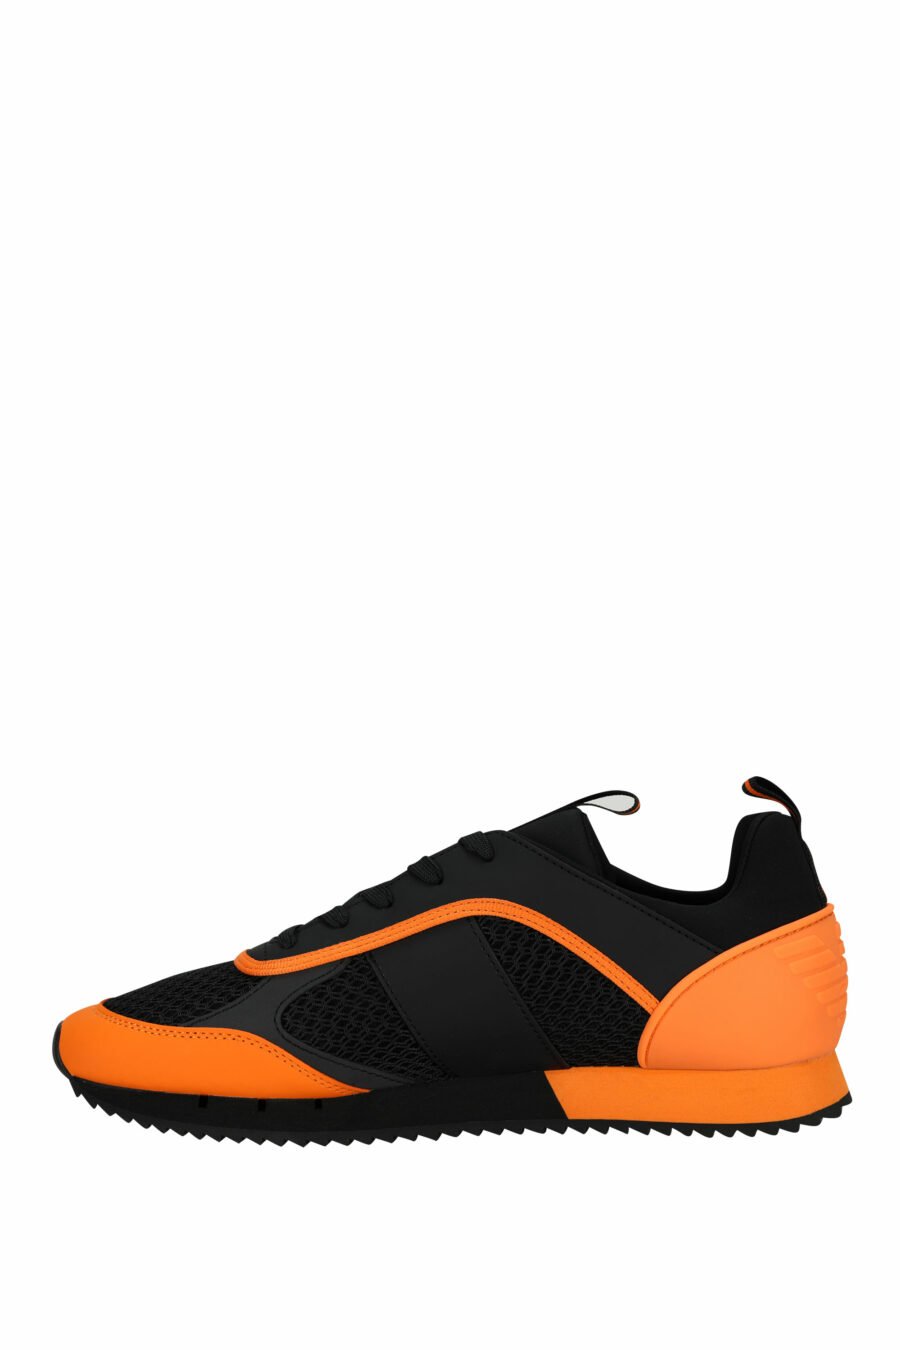 Zapatillas negras con logo "lux identity" naranja - 8057970798149 2